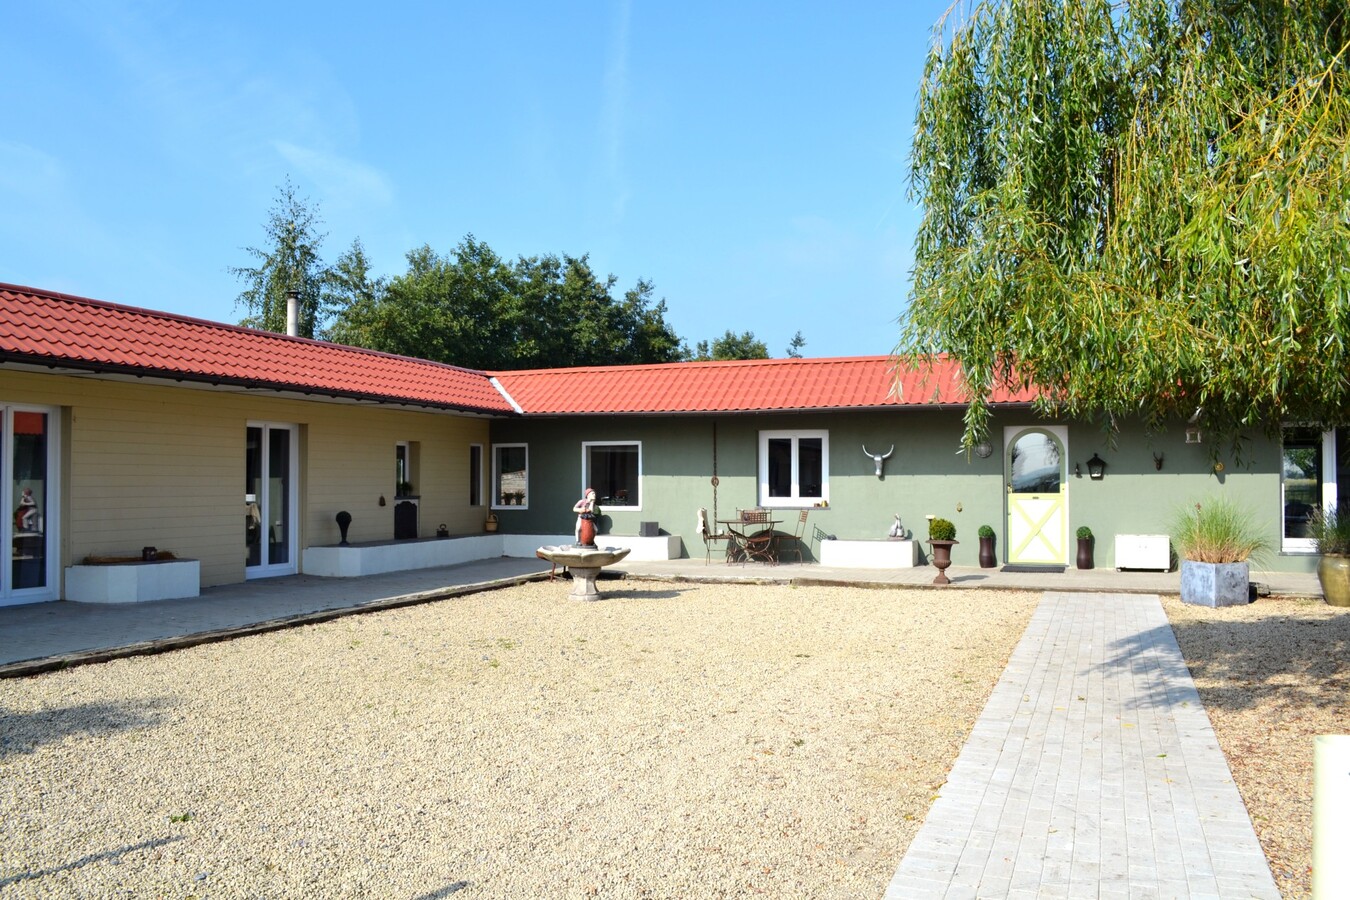 Property sold in Sint-Jan-in-Eremo